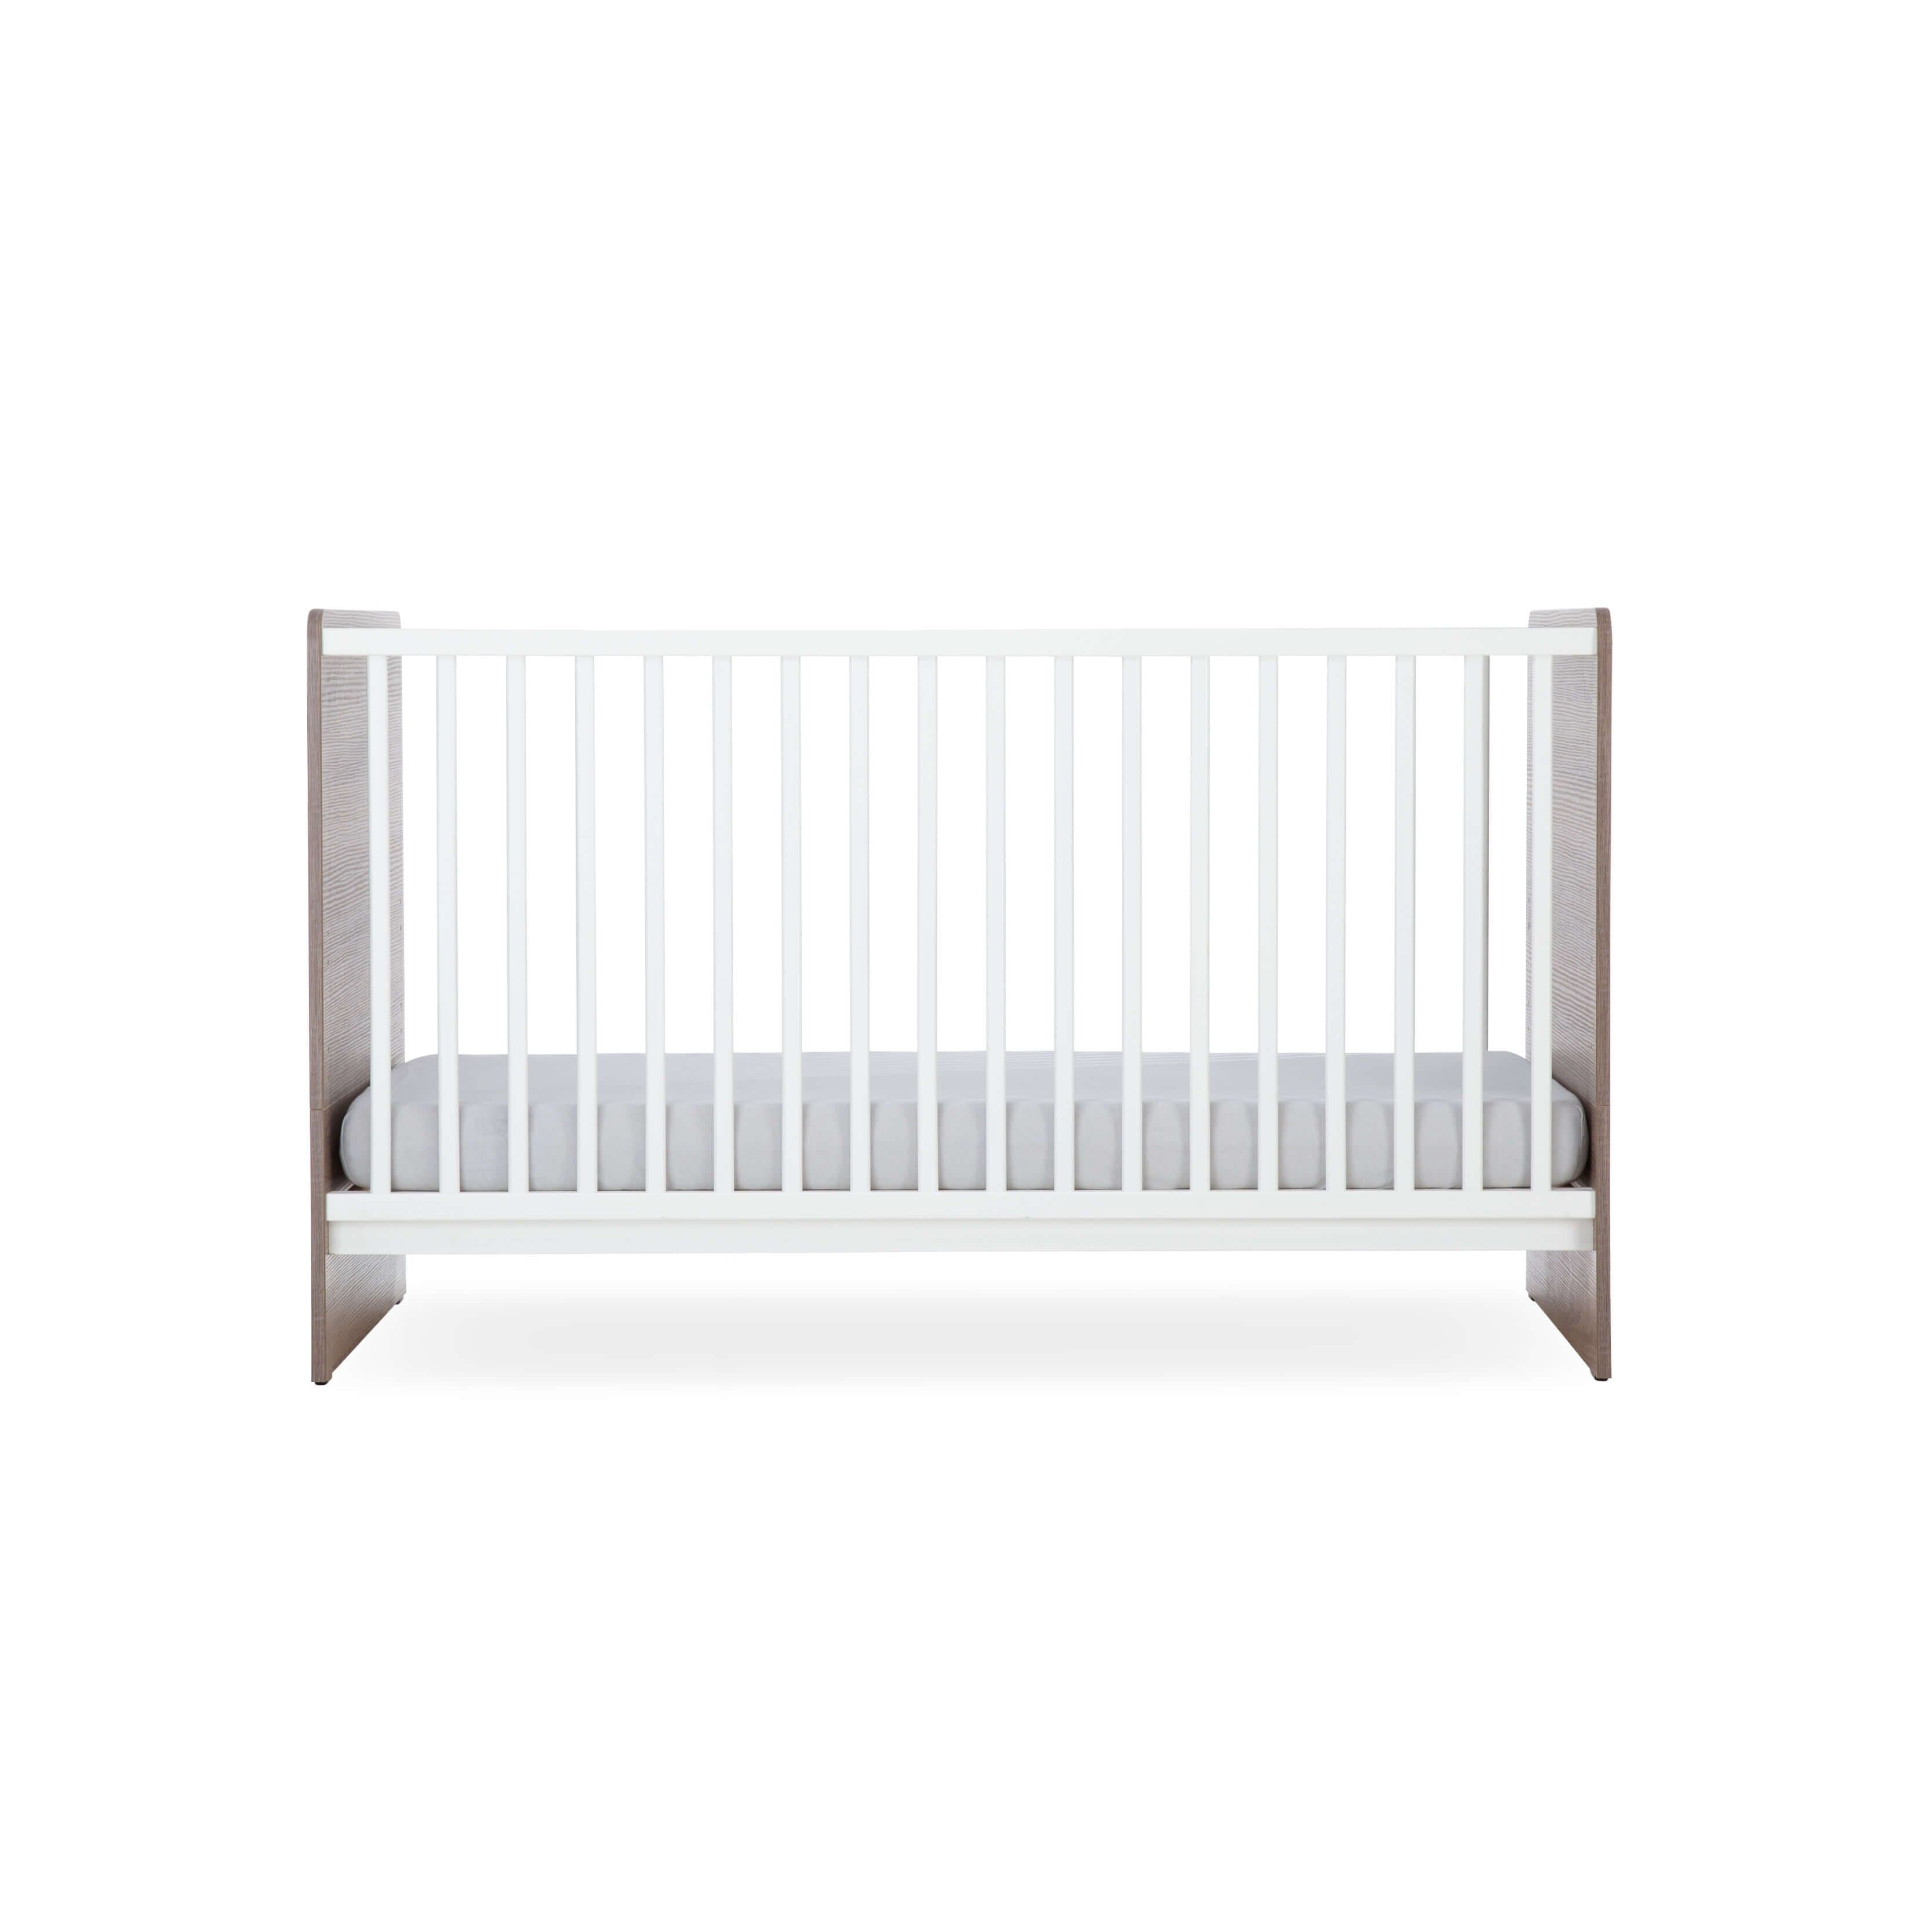 Cuddleco Enzo 3 Piece Nursery Furniture Set - Truffle Oak & White -  | For Your Little One